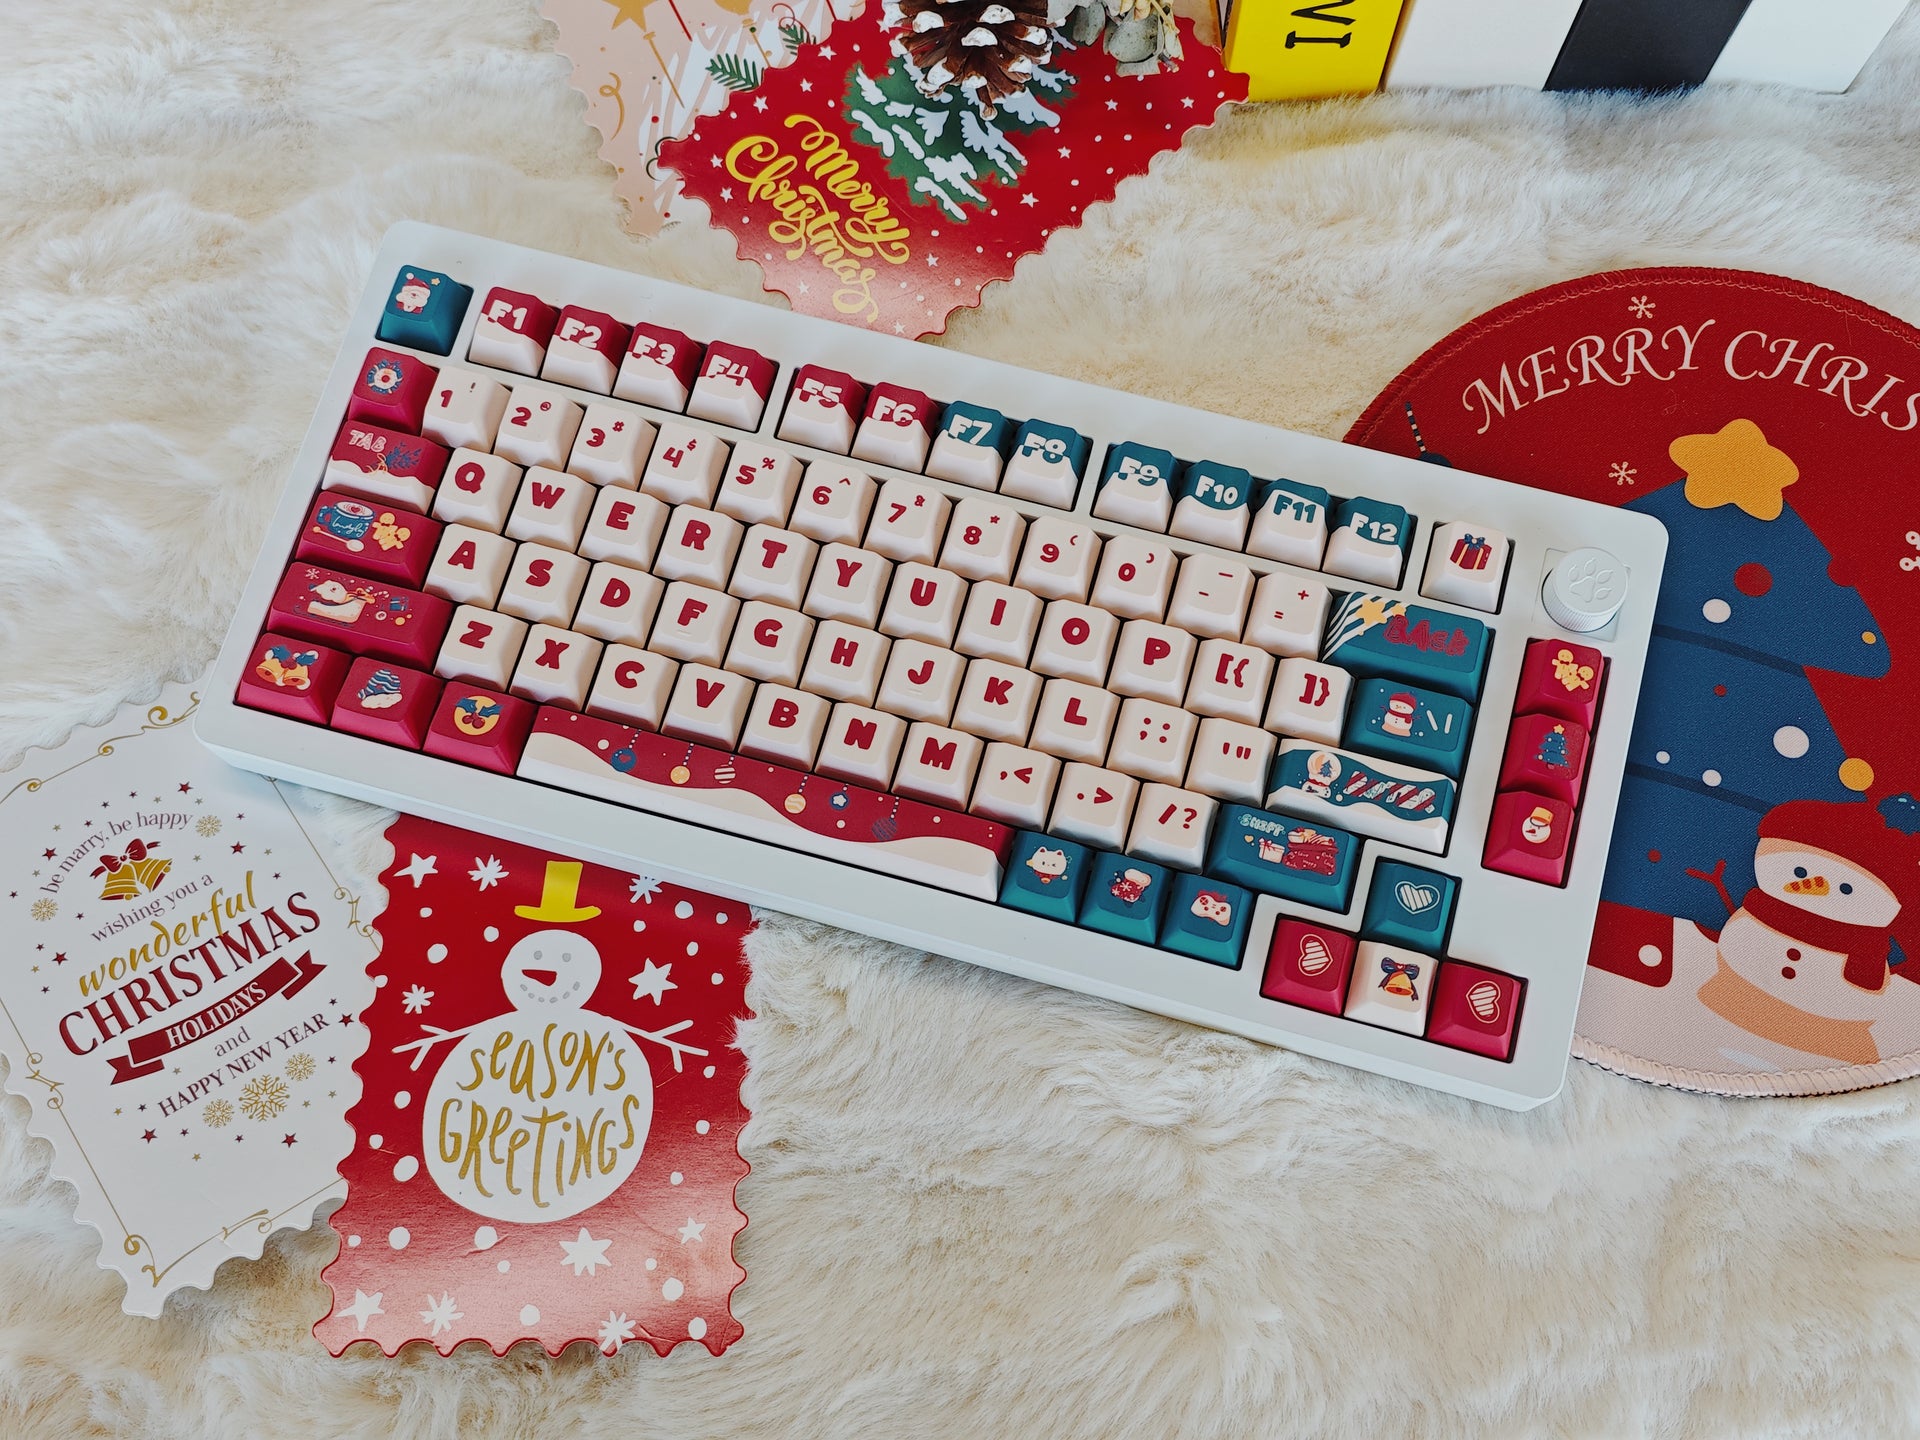 Chosfox Keyboard with Merry Christmas Vibe